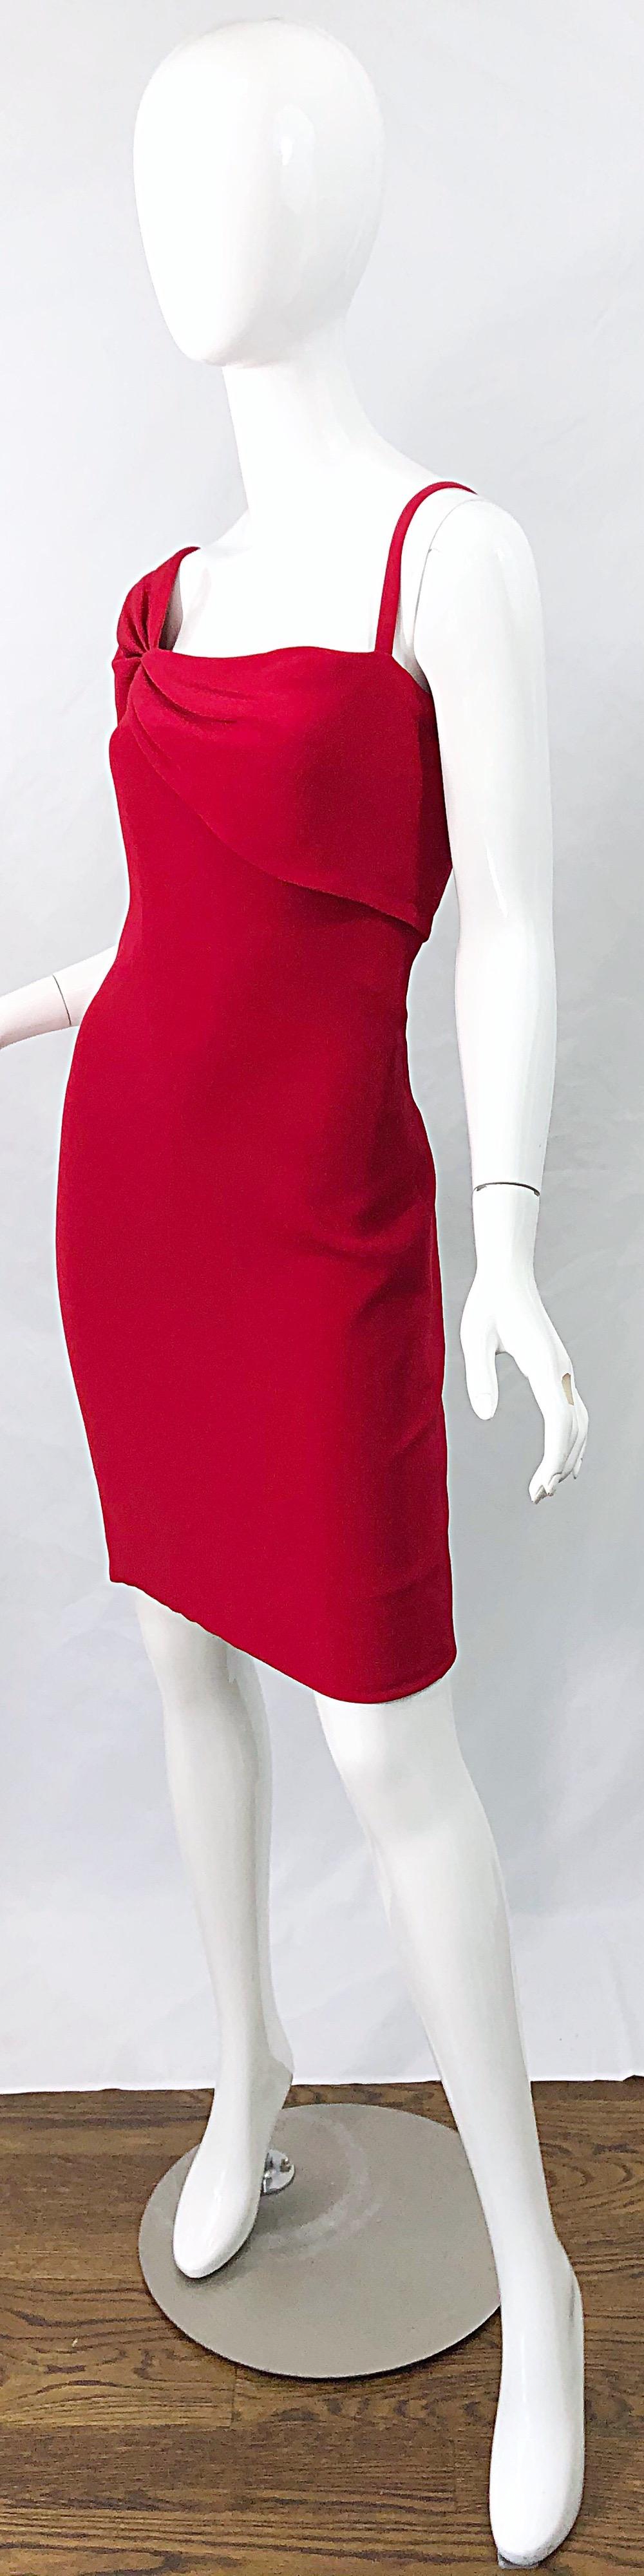 80s red dress